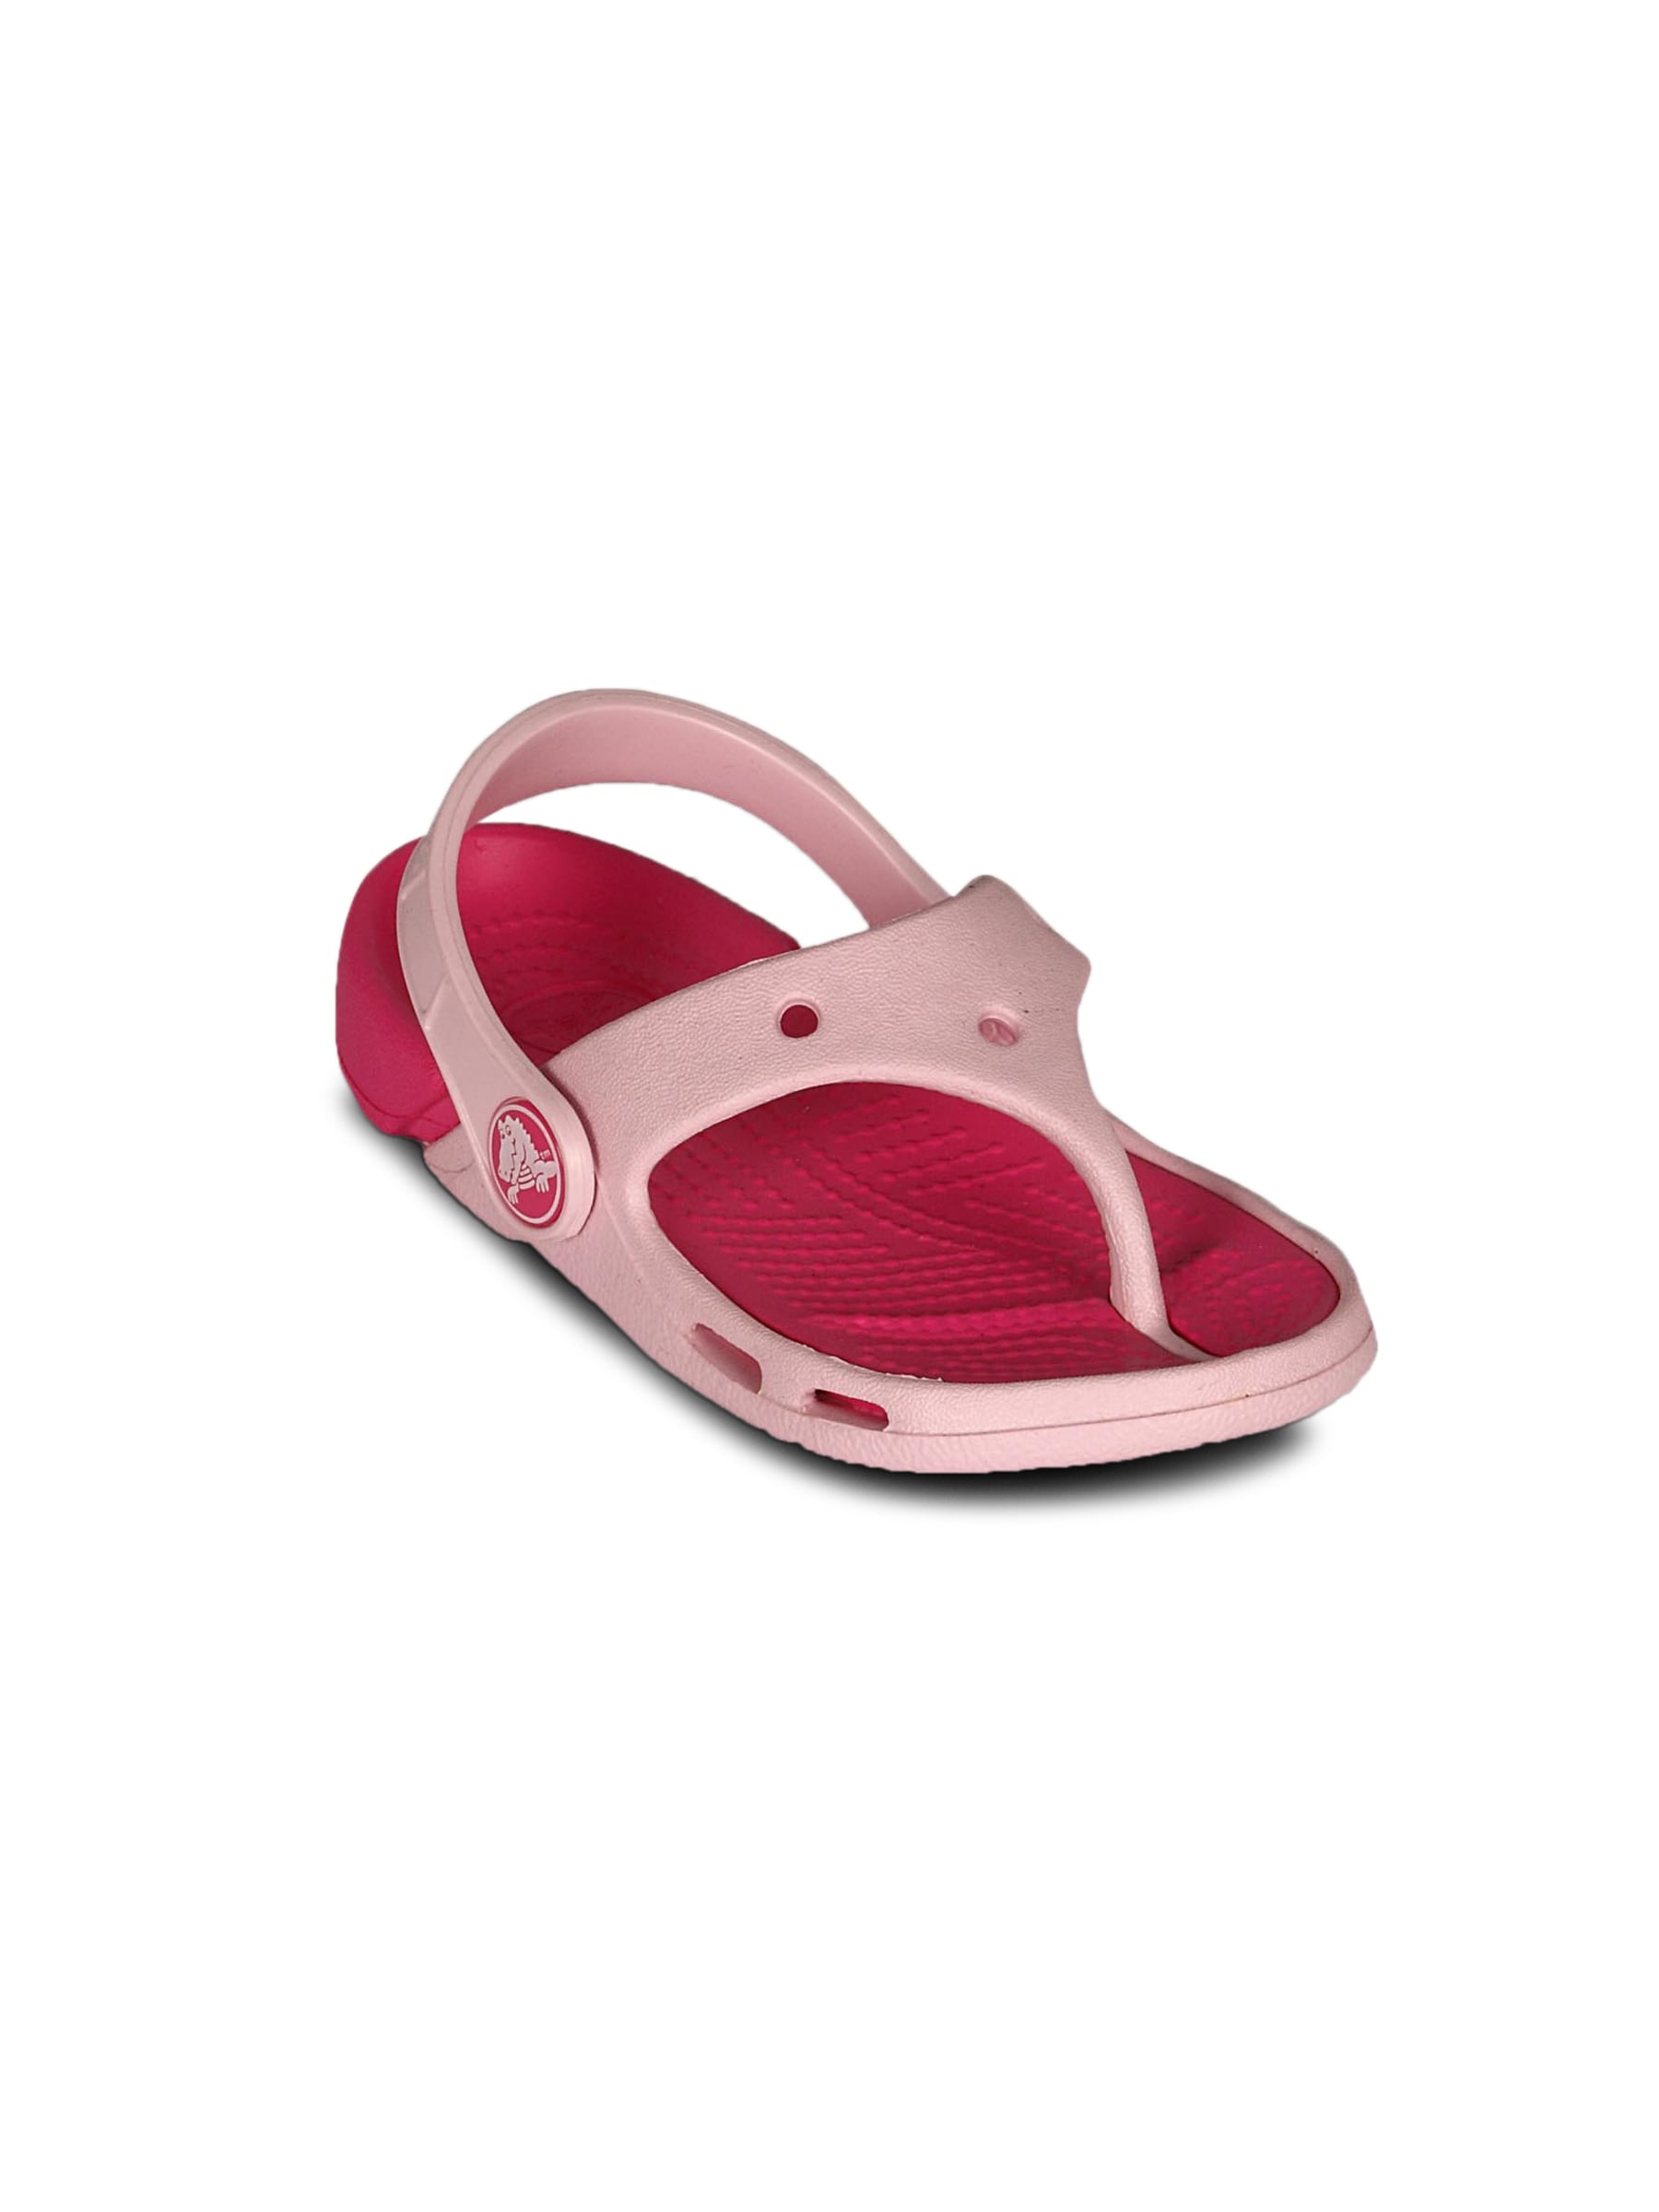 Crocs Kid's Electro Flip Bubblegum Fuchsia Pink Kidswear